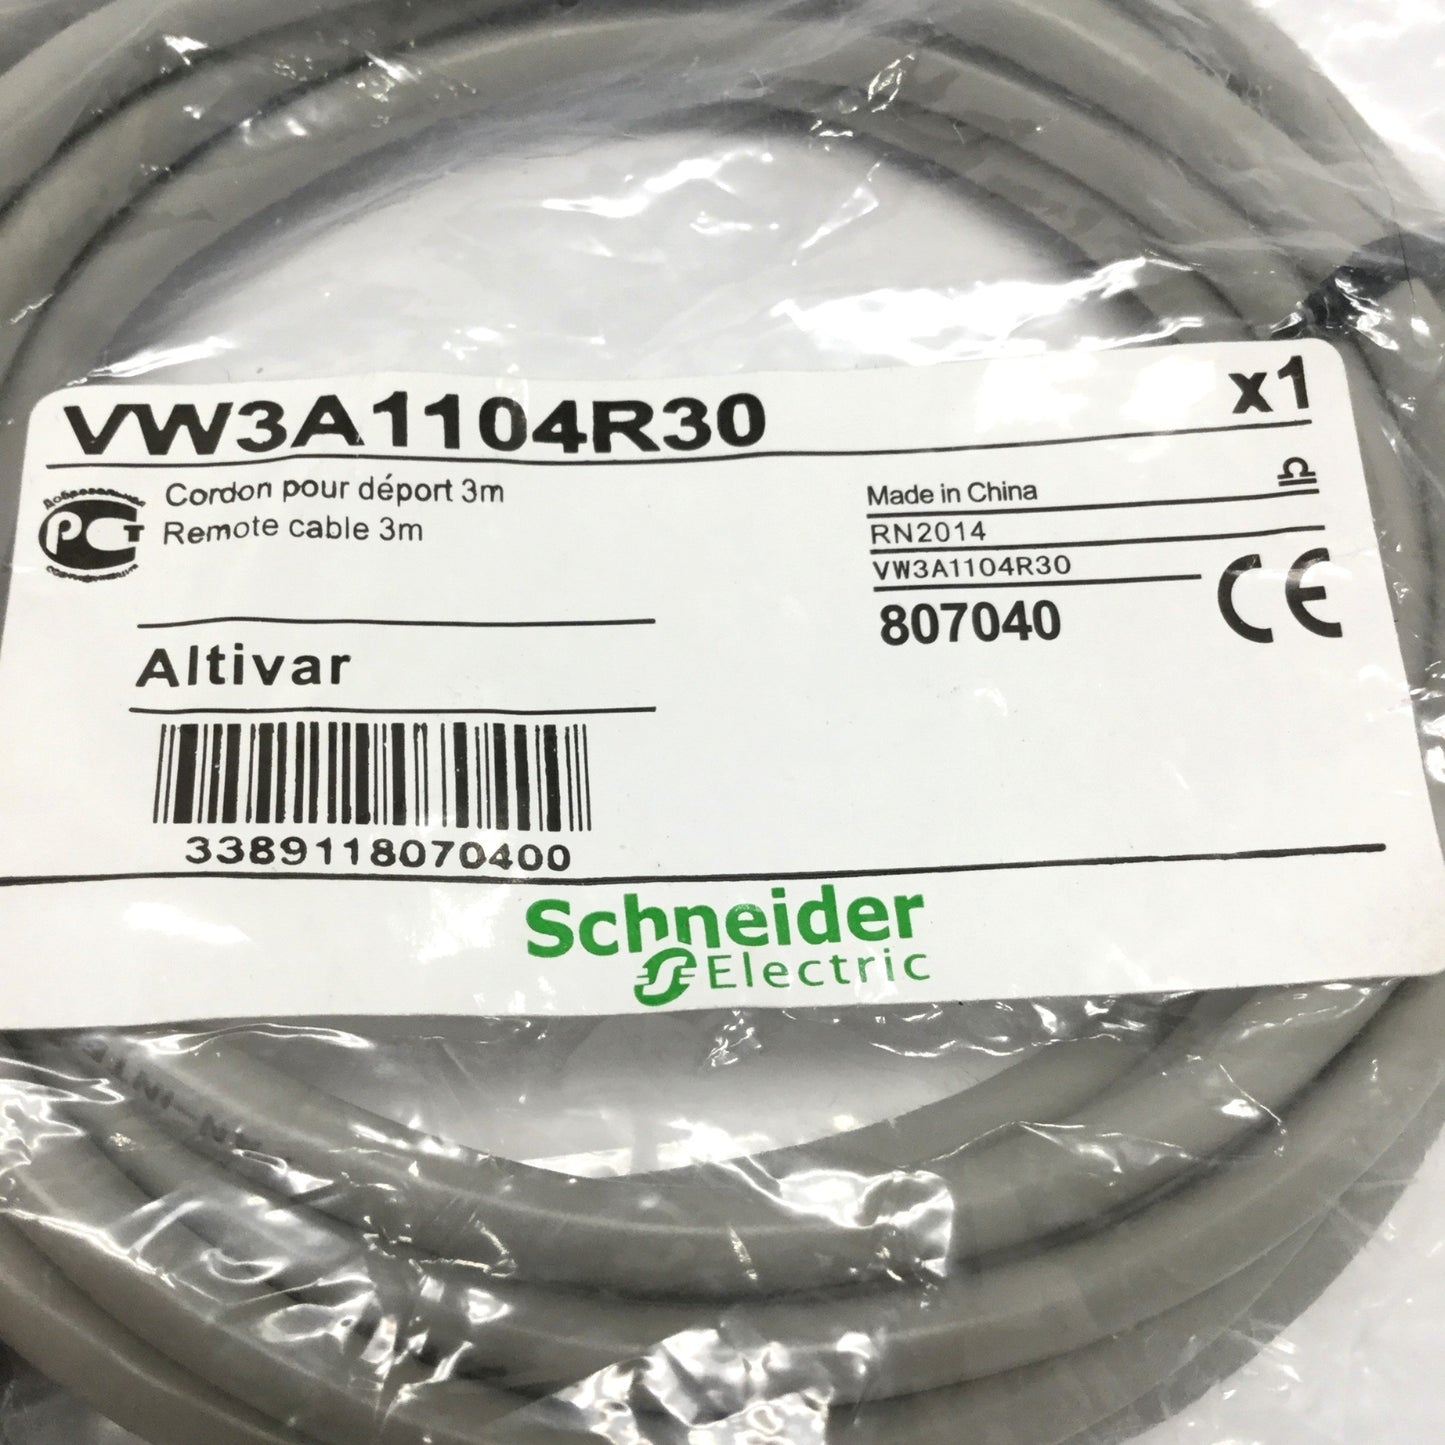 New Schneider VW3A1104R30 Altivar Graphic Display Keypad MTG Remote Cable RJ45, 3m